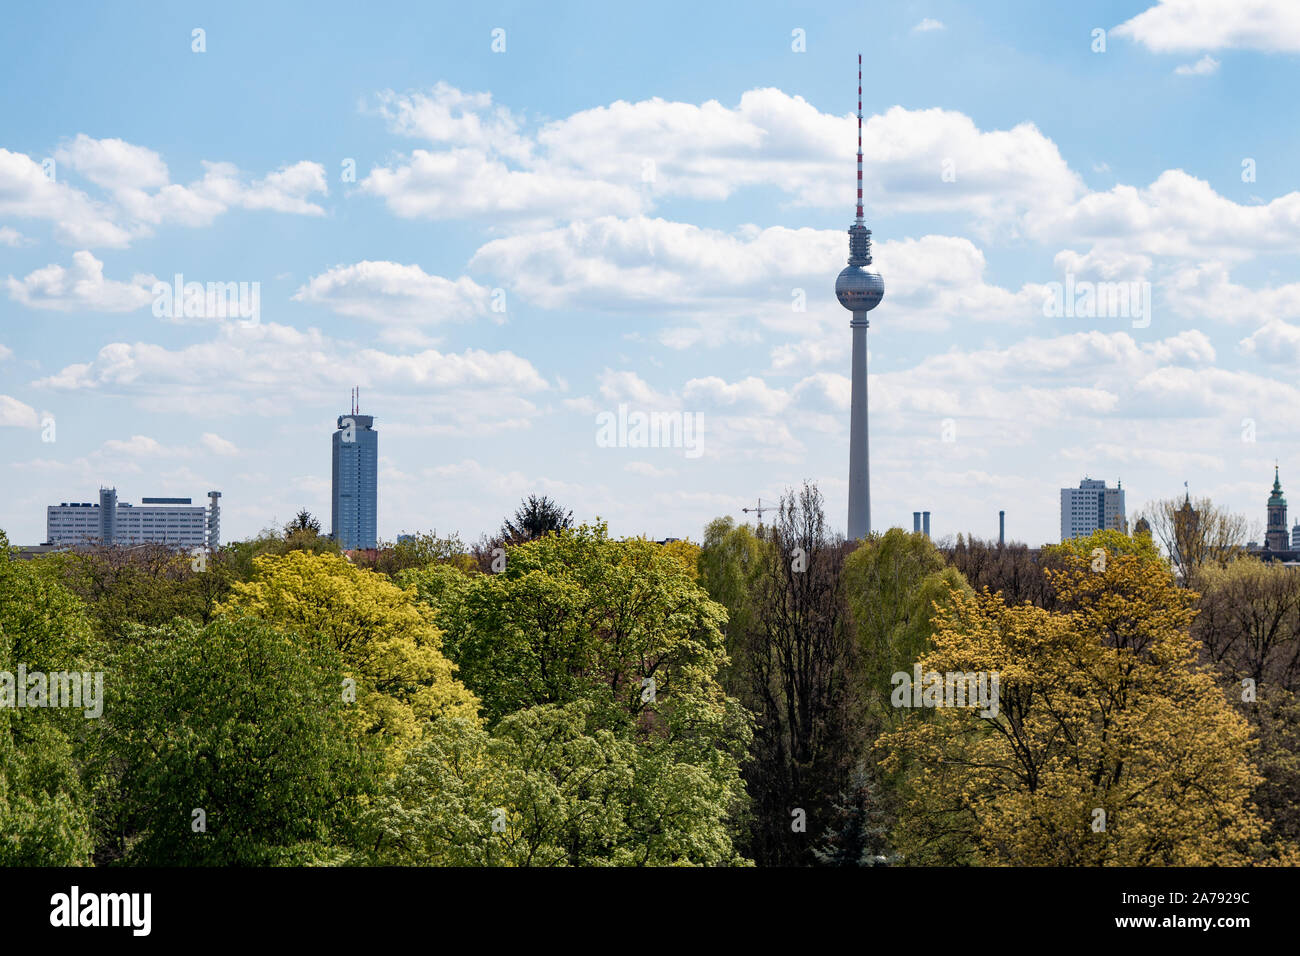 TV tower on the berlin skyline Stock Photo